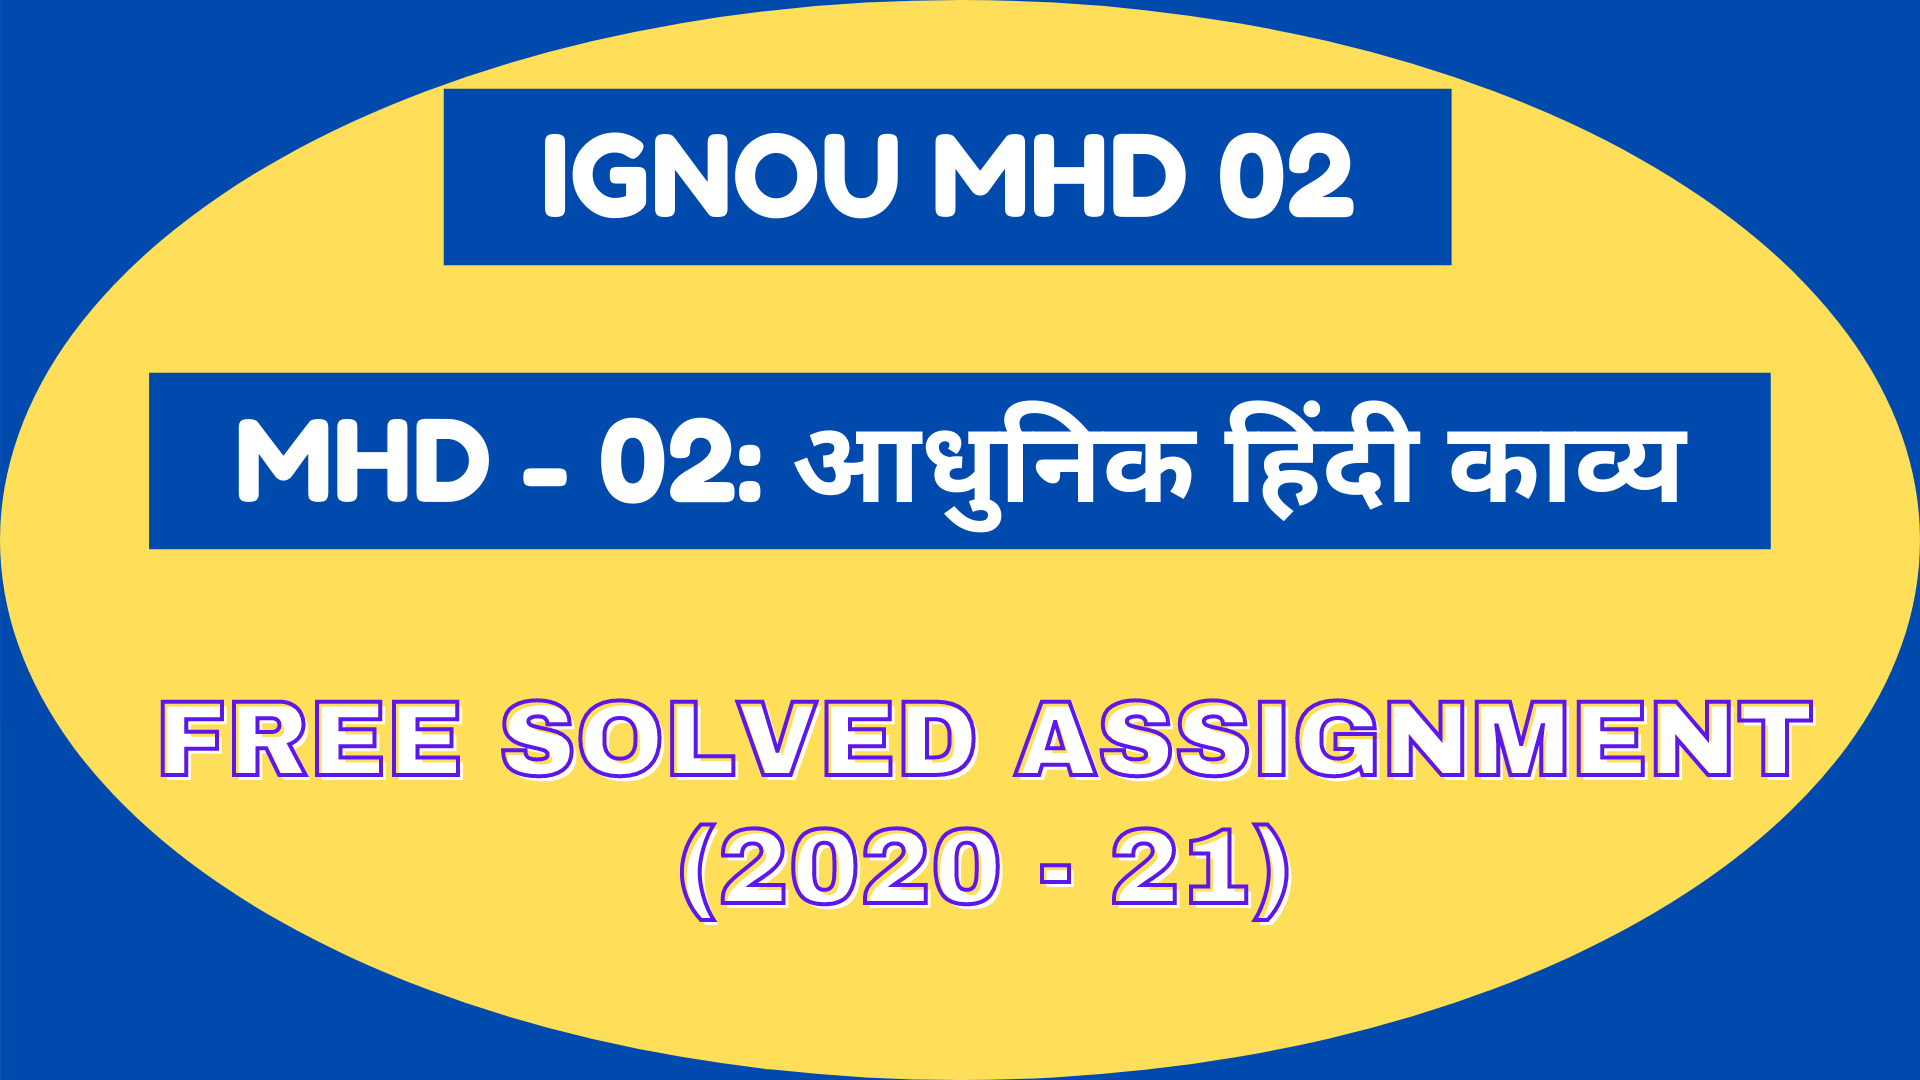 MHD - 02: आधुनिक हिंदी काव्य, IGNOU MHD, IGNOU MHD Free Solved Assignment (2020 - 21), IGNOU Free Solved Assignment 2020 - 21